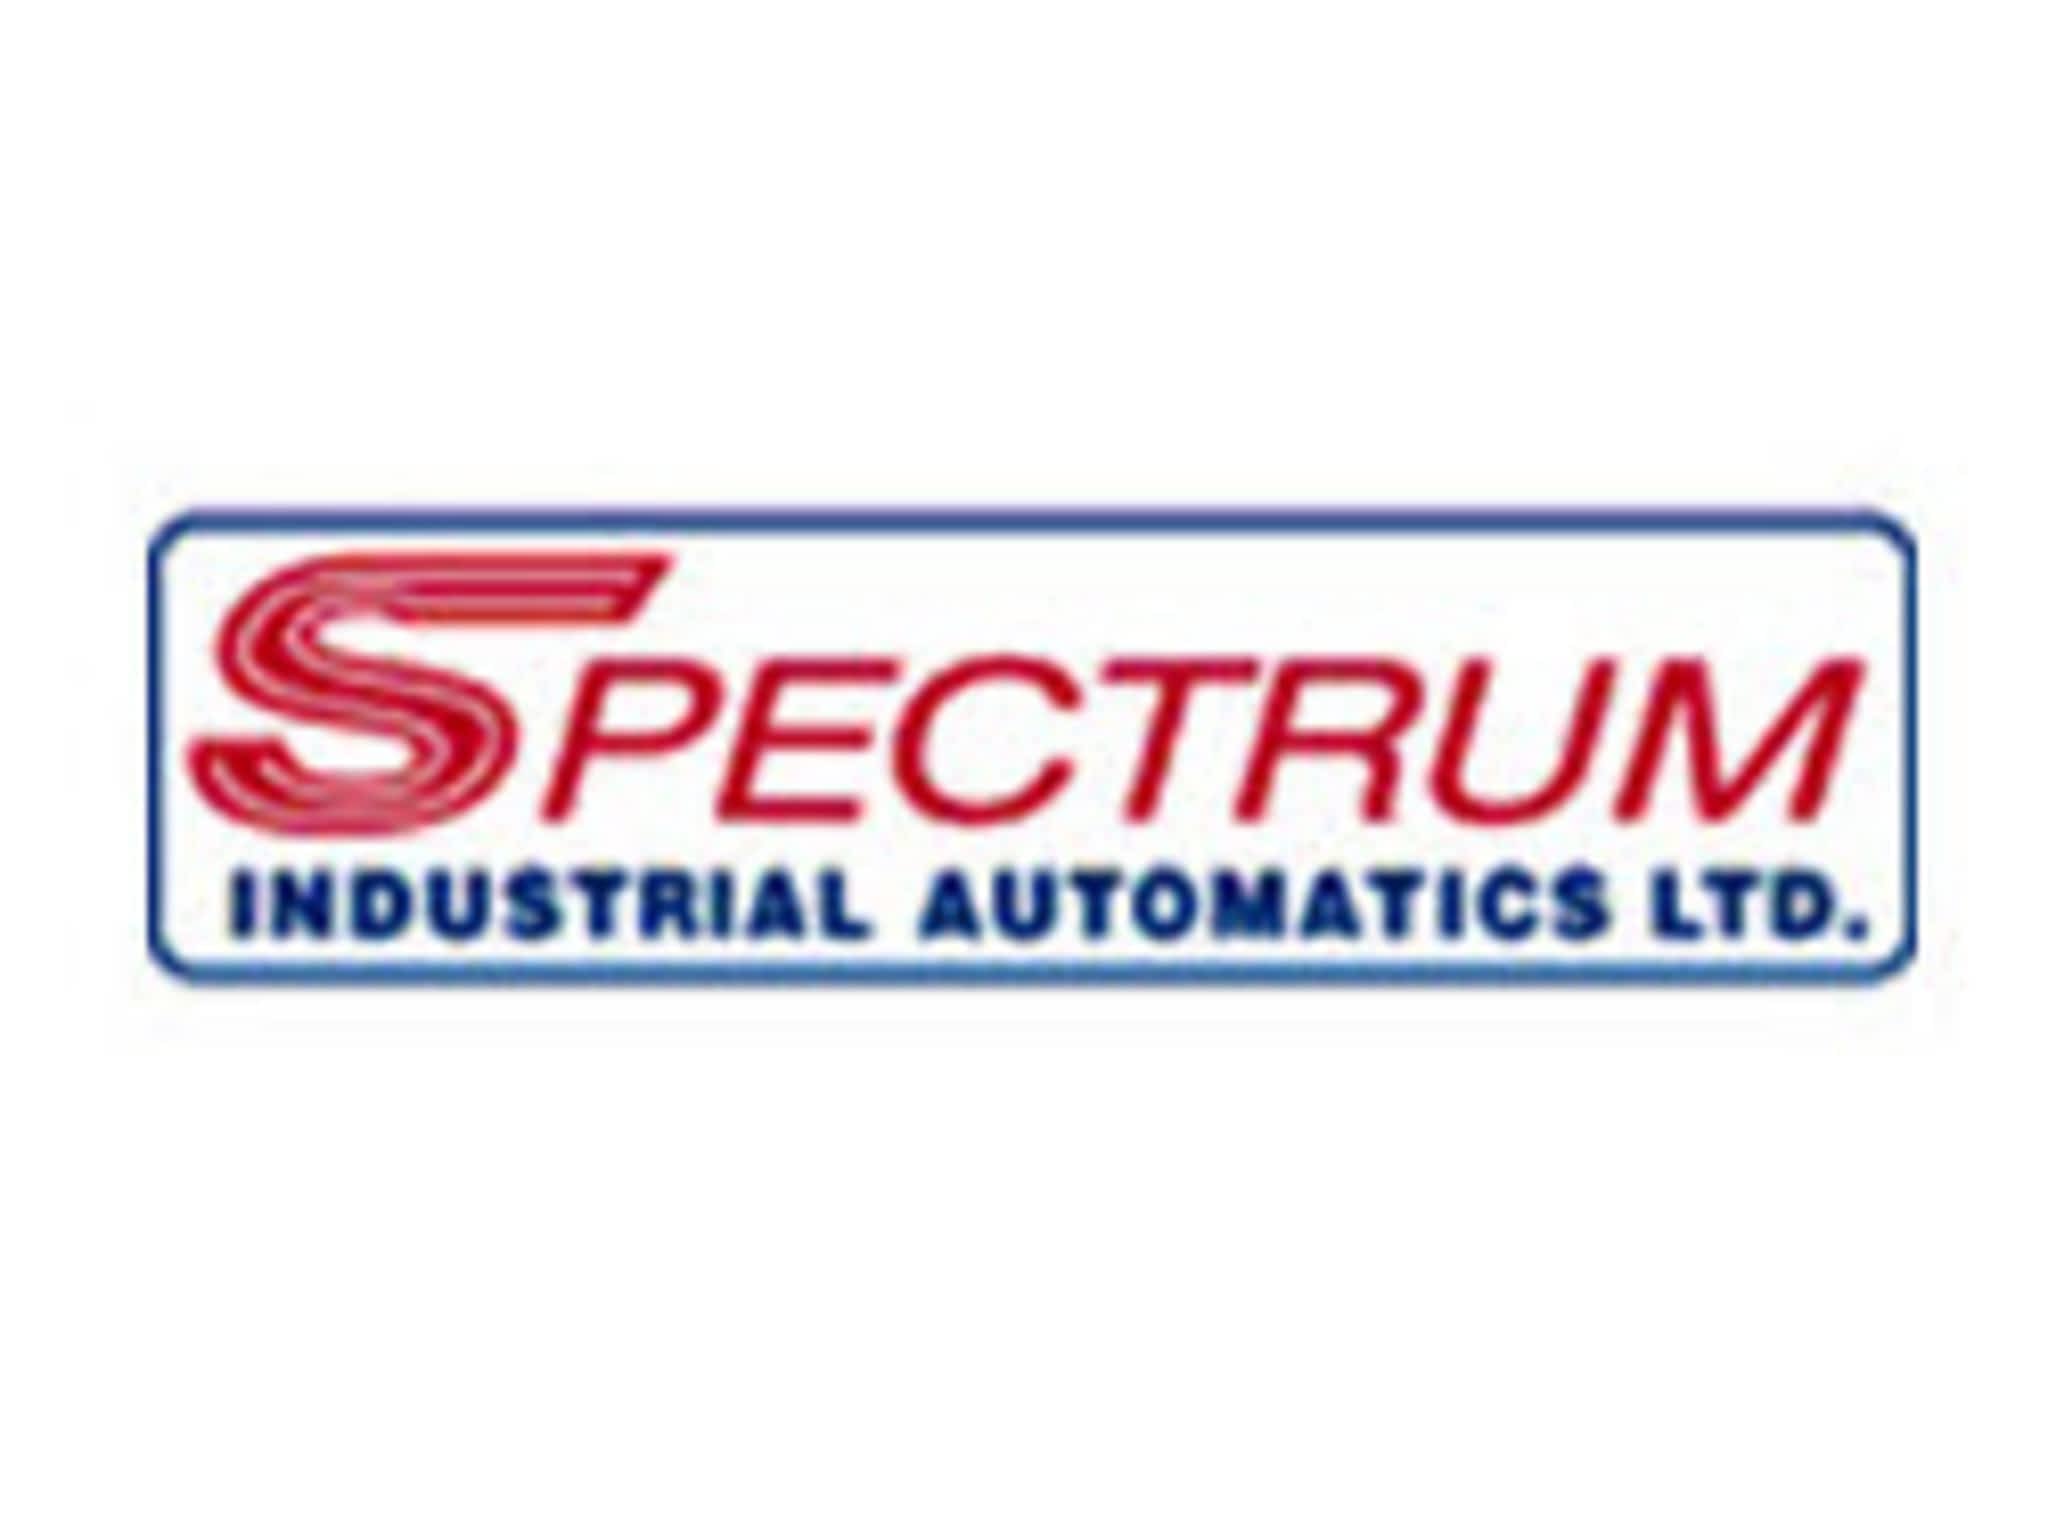 photo Spectrum Industrial Automatics Ltd